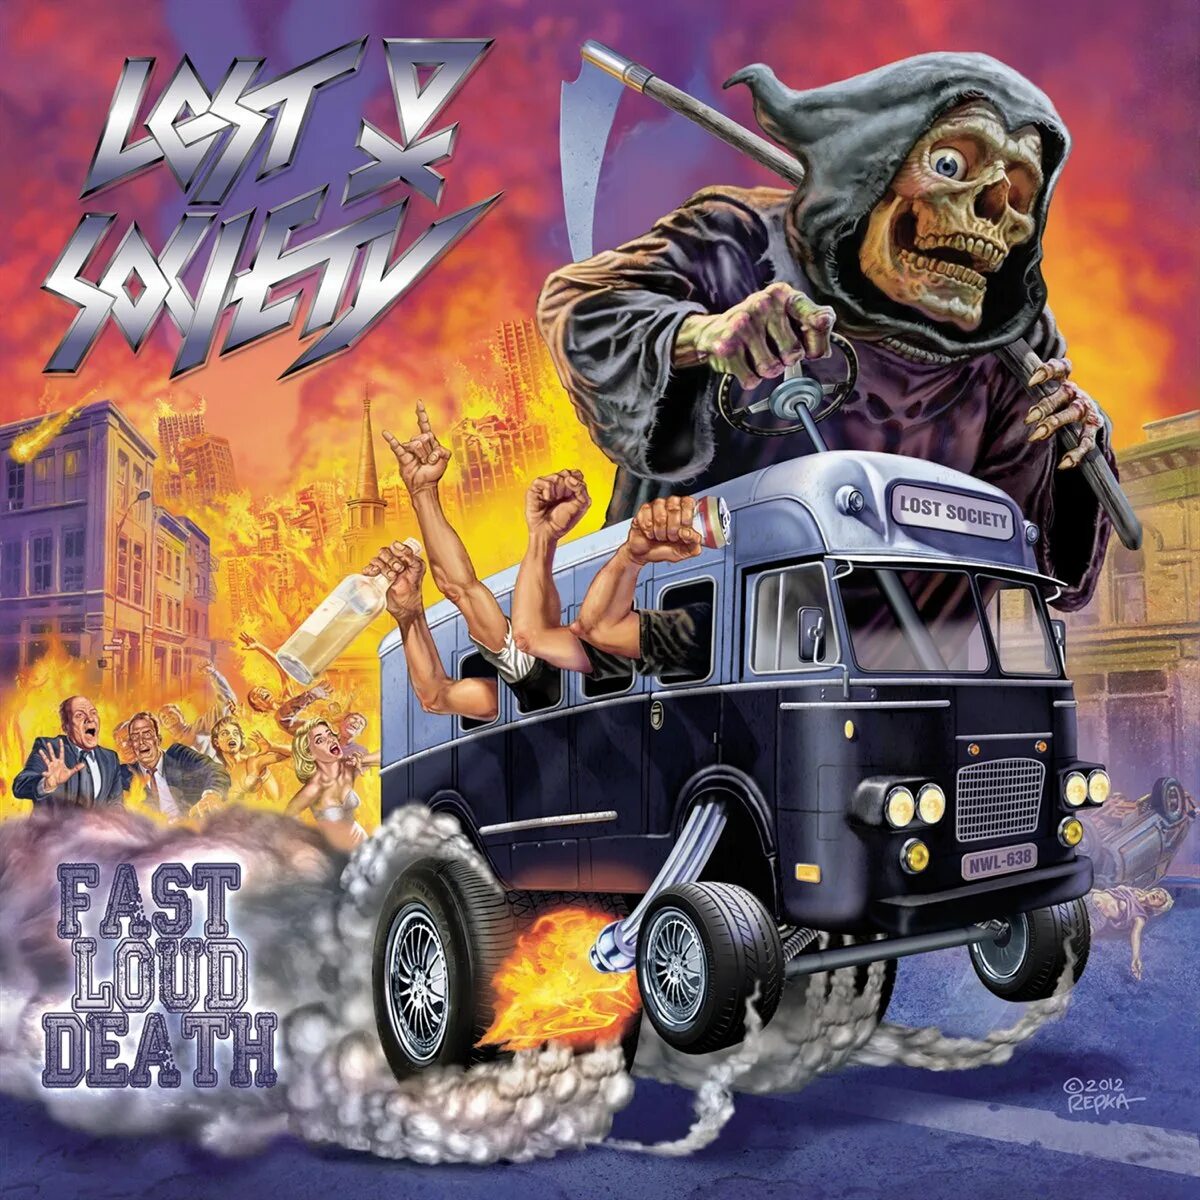 Last society. Lost Society - fast Loud Death (2013). Lost Society альбом fast Loud Death. Lost Society fast Loud Death обложка.